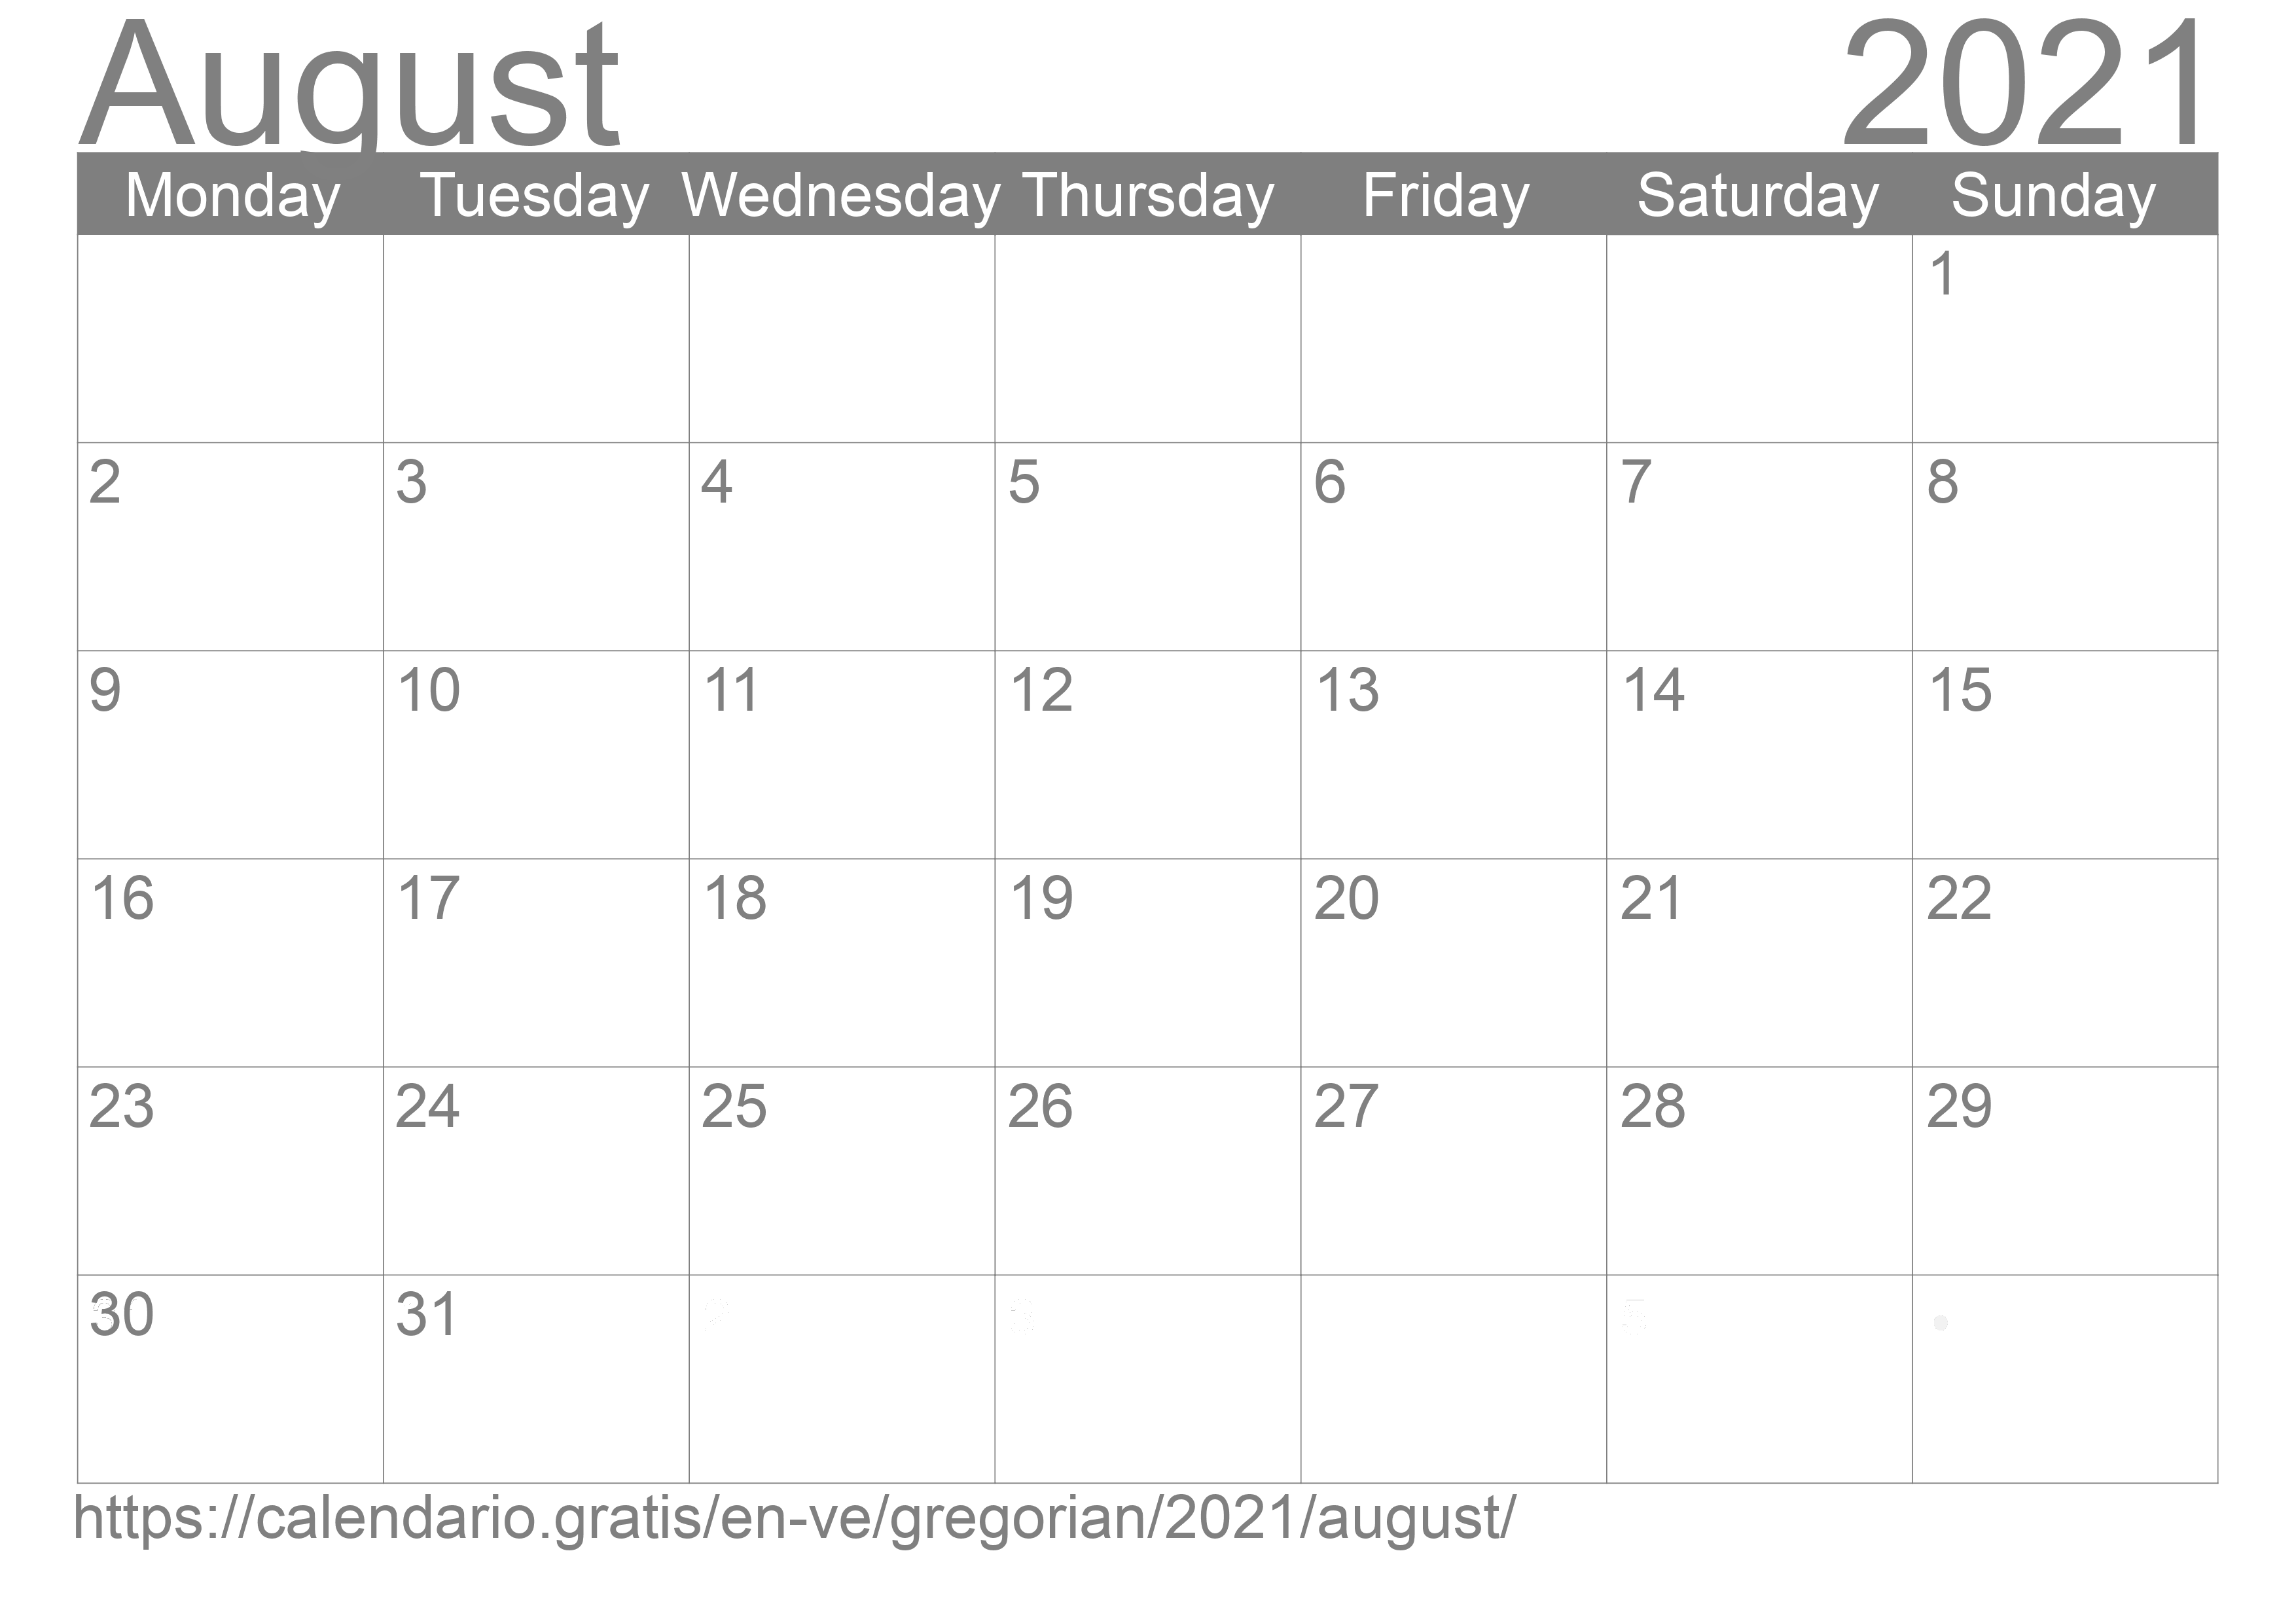 Calendar August 2021 to print